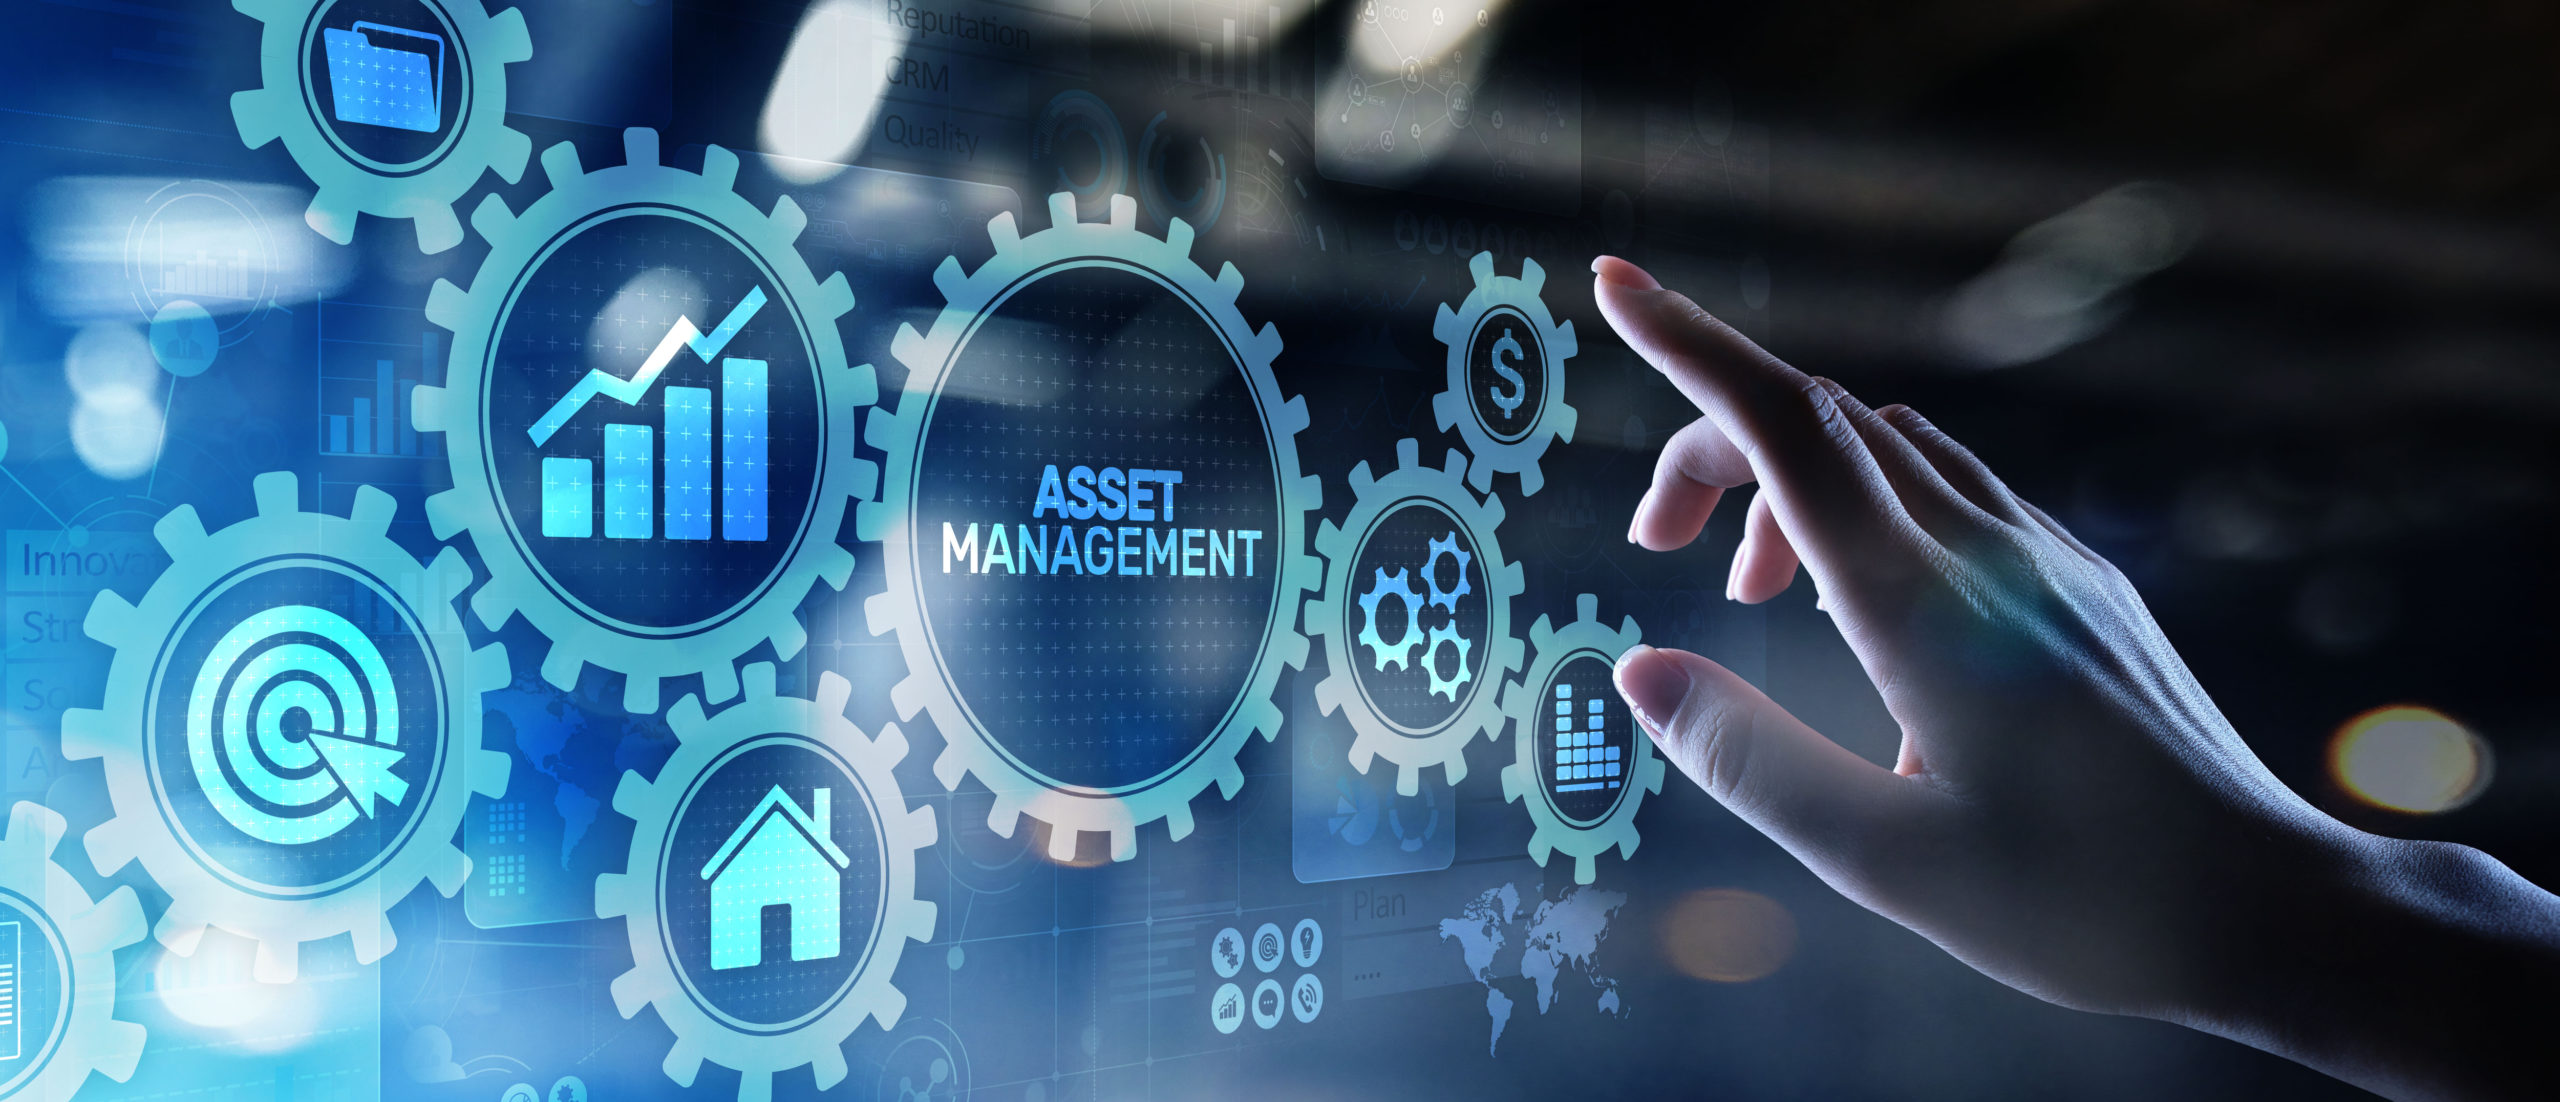 Asset Management Cottleville, MO | Financial Planners | Investment Advisors | Wealth Management